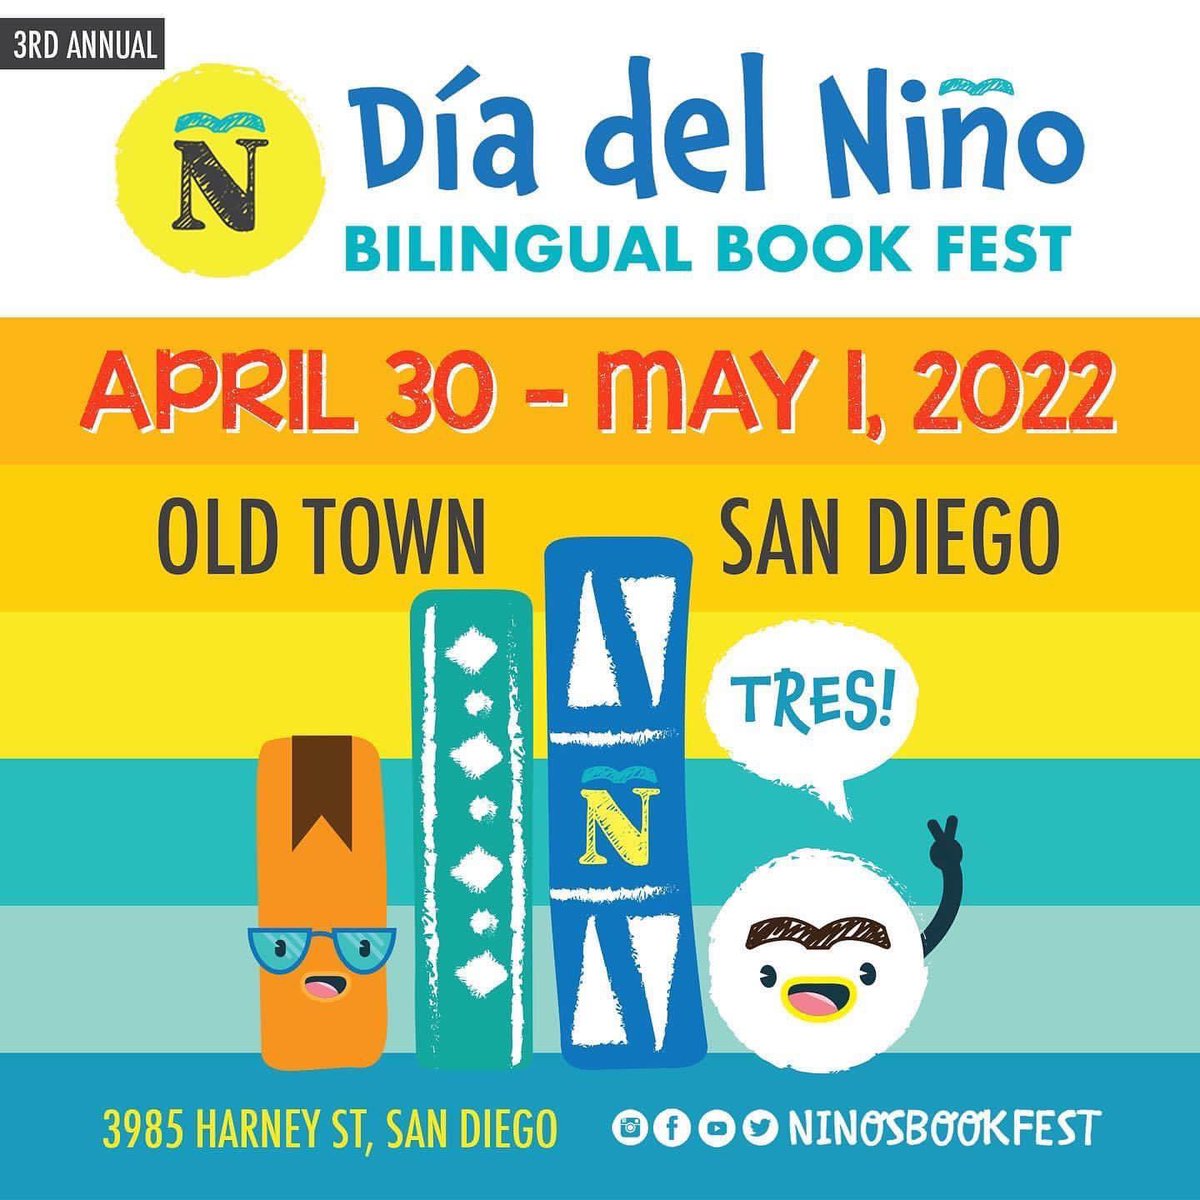 #duallanguage Colegas!
Join us to celebrate @ninosbookfest 
#books #childrensbook #ebook #bilingualbooks #latinxauthors